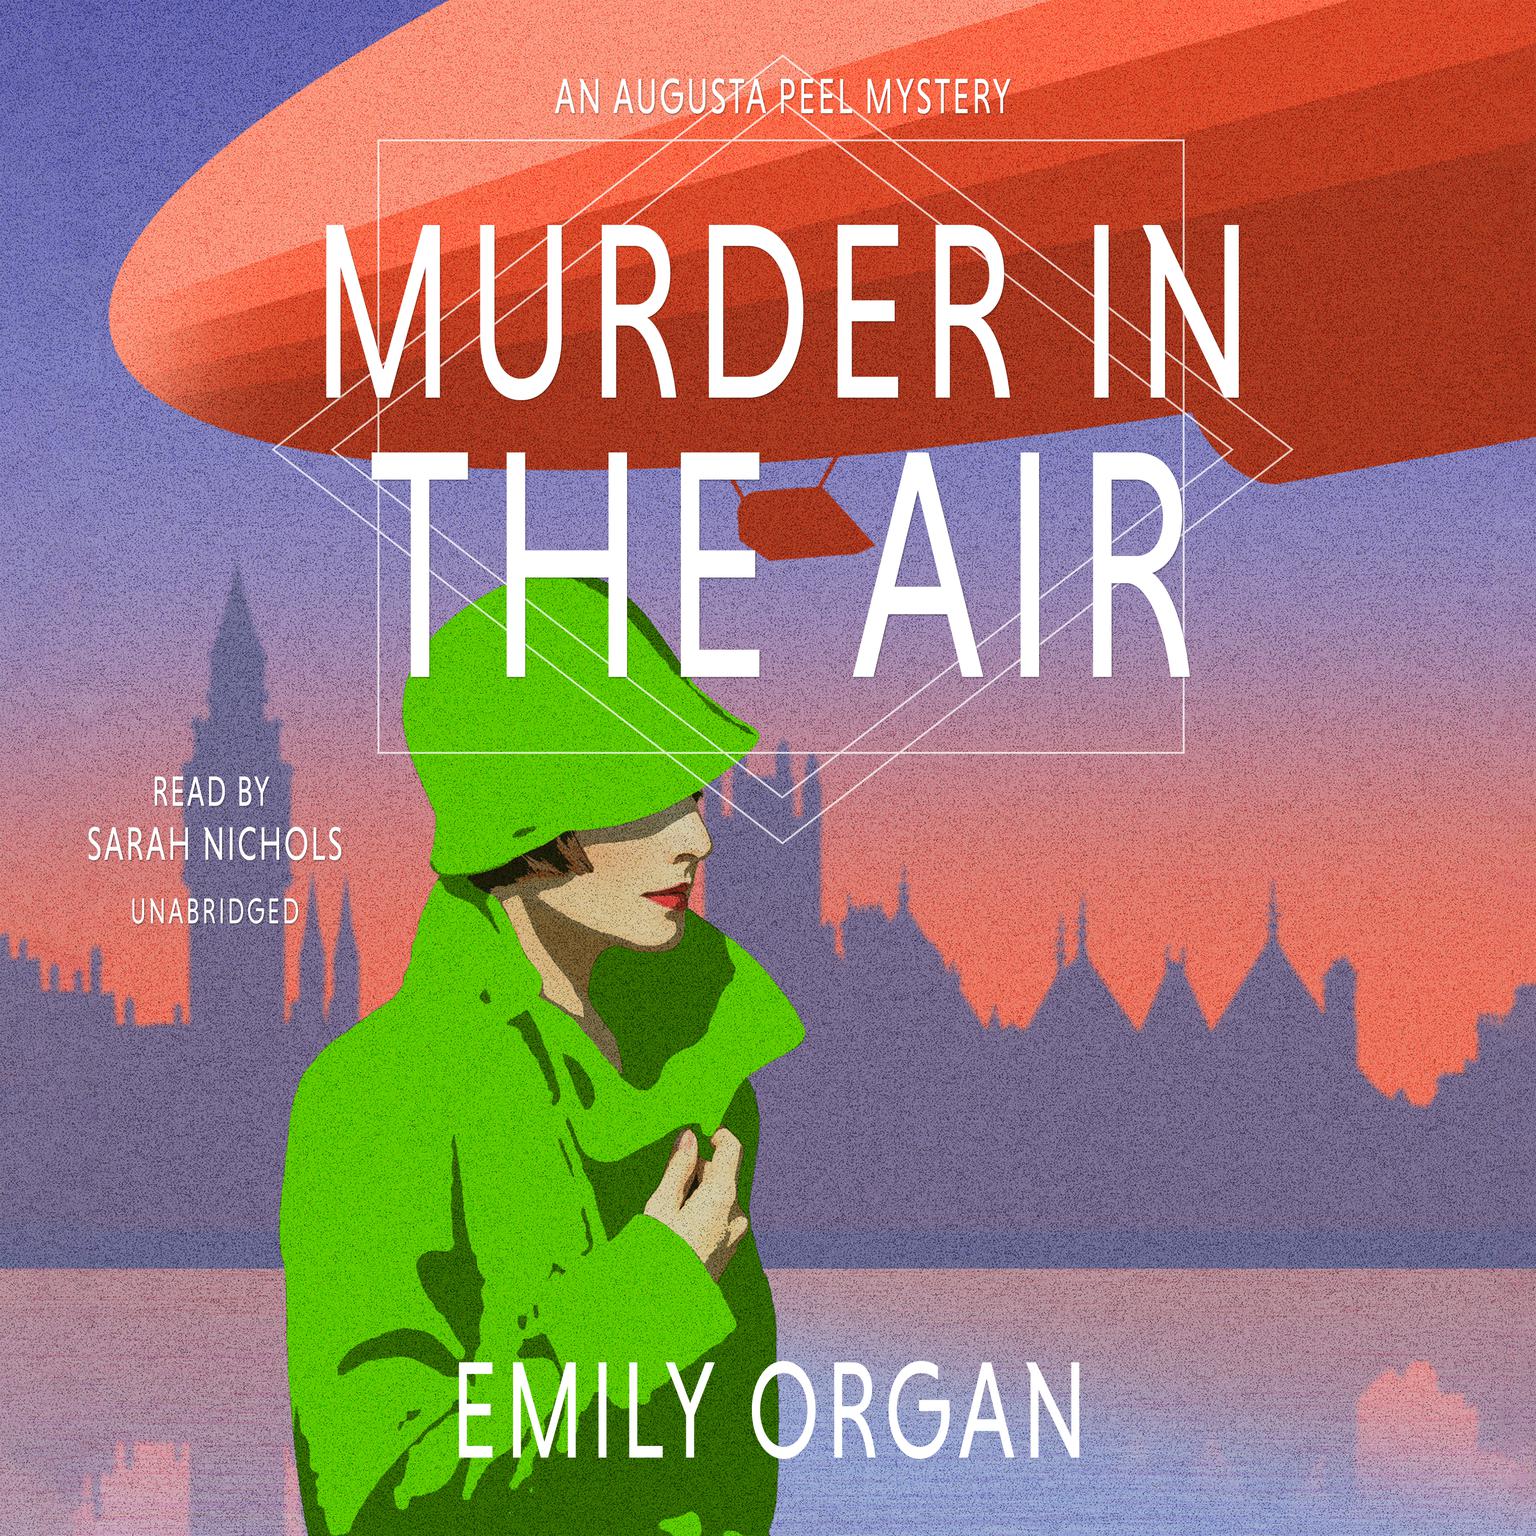 Murder in the Air Audiobook, by Emily Organ